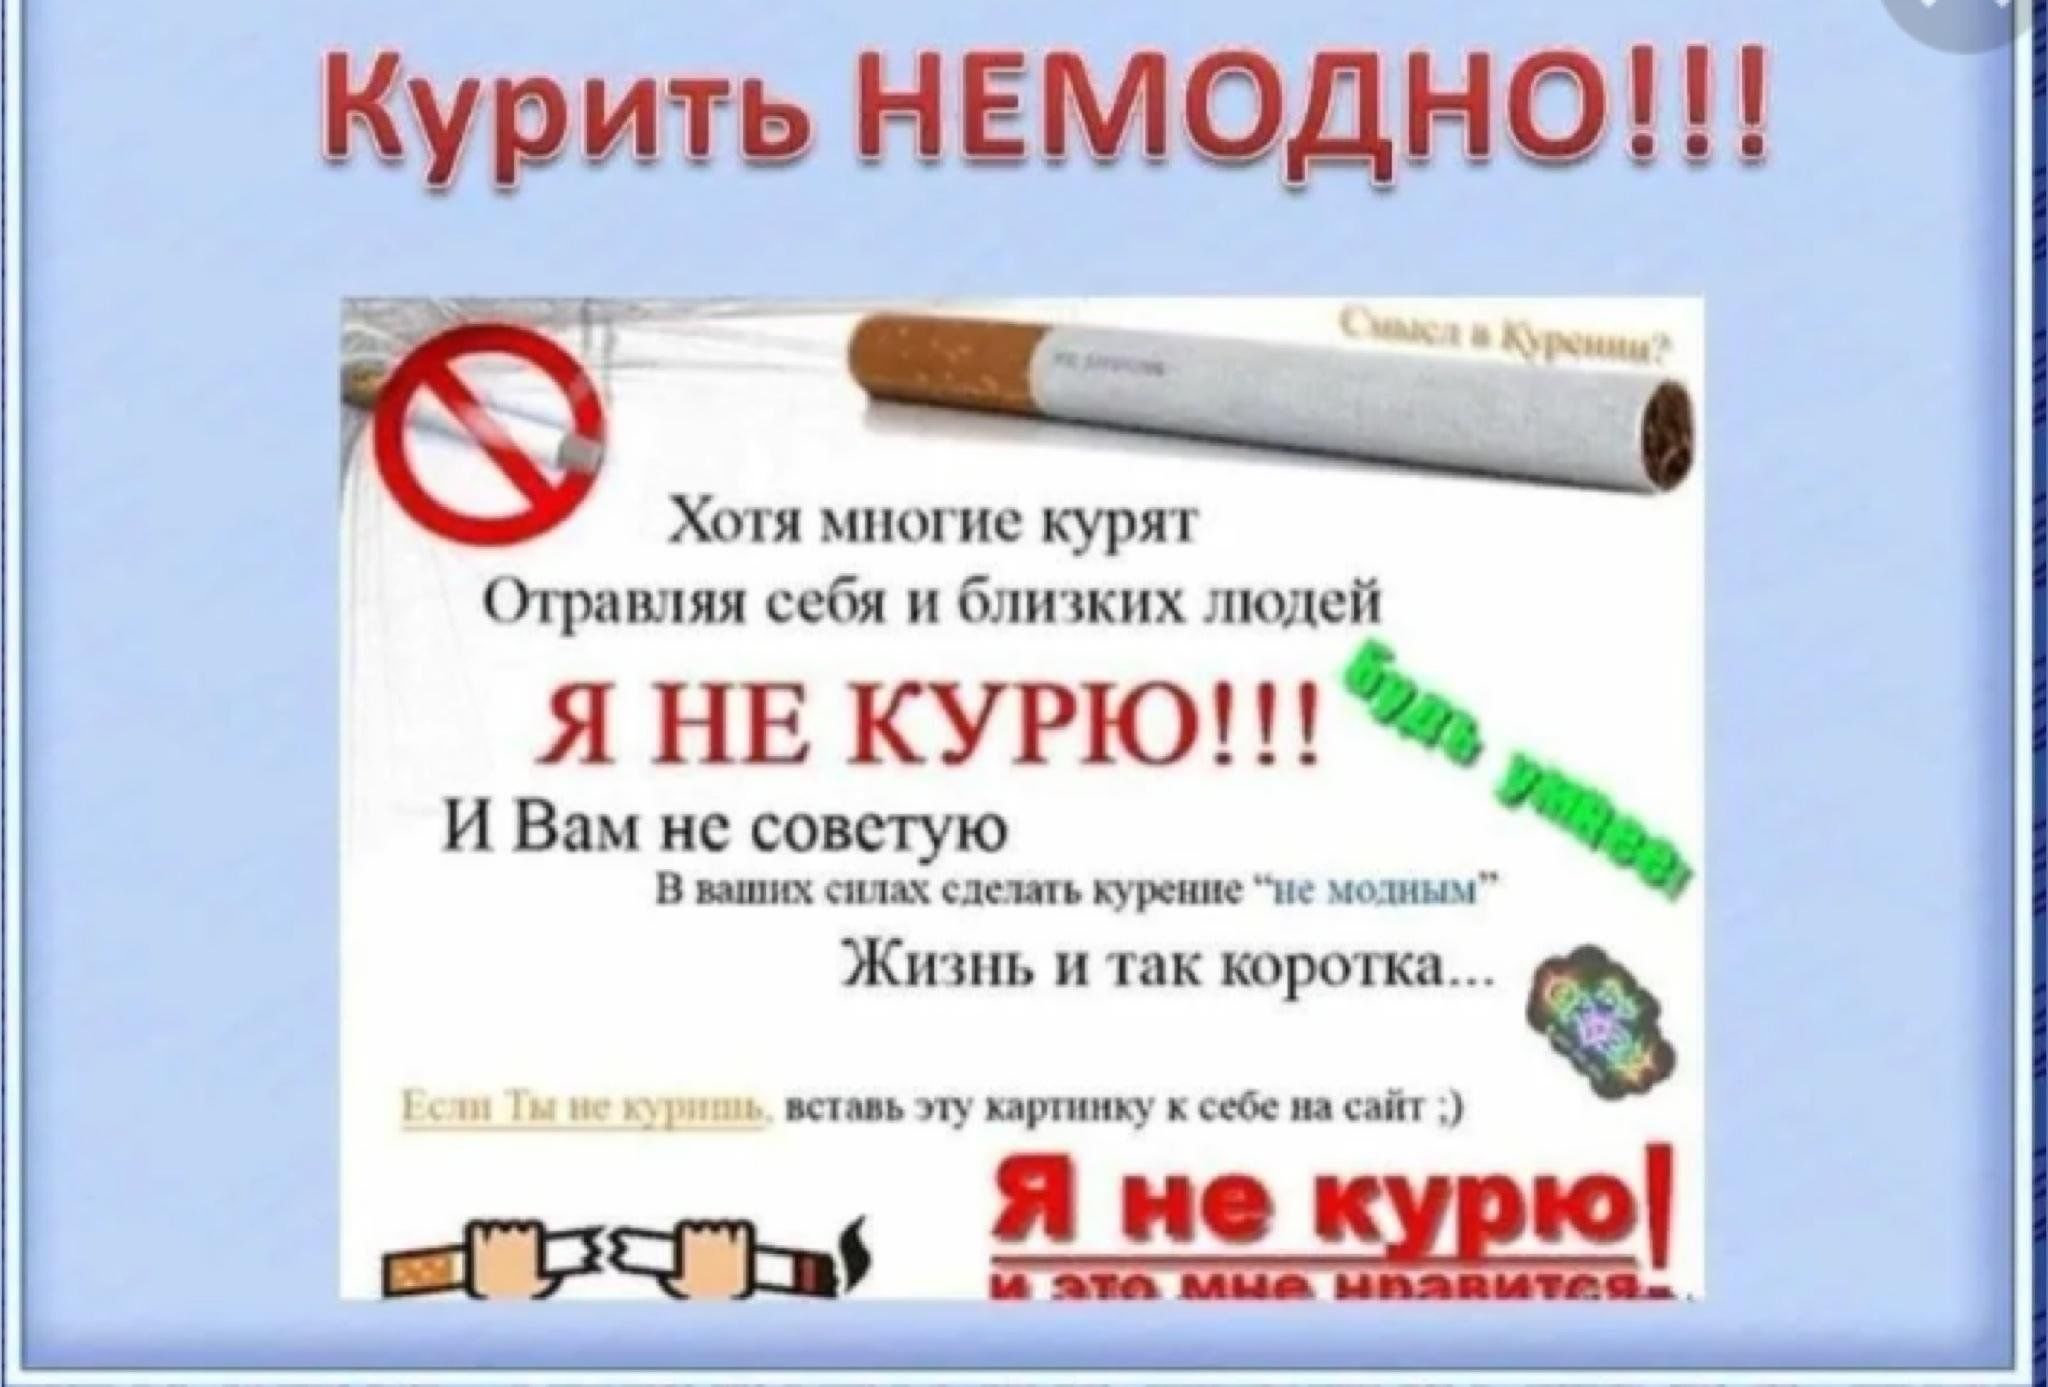 Книги о вреде курения. Плакат курить вредно. Профилактика против курения. Вред табака плакат.